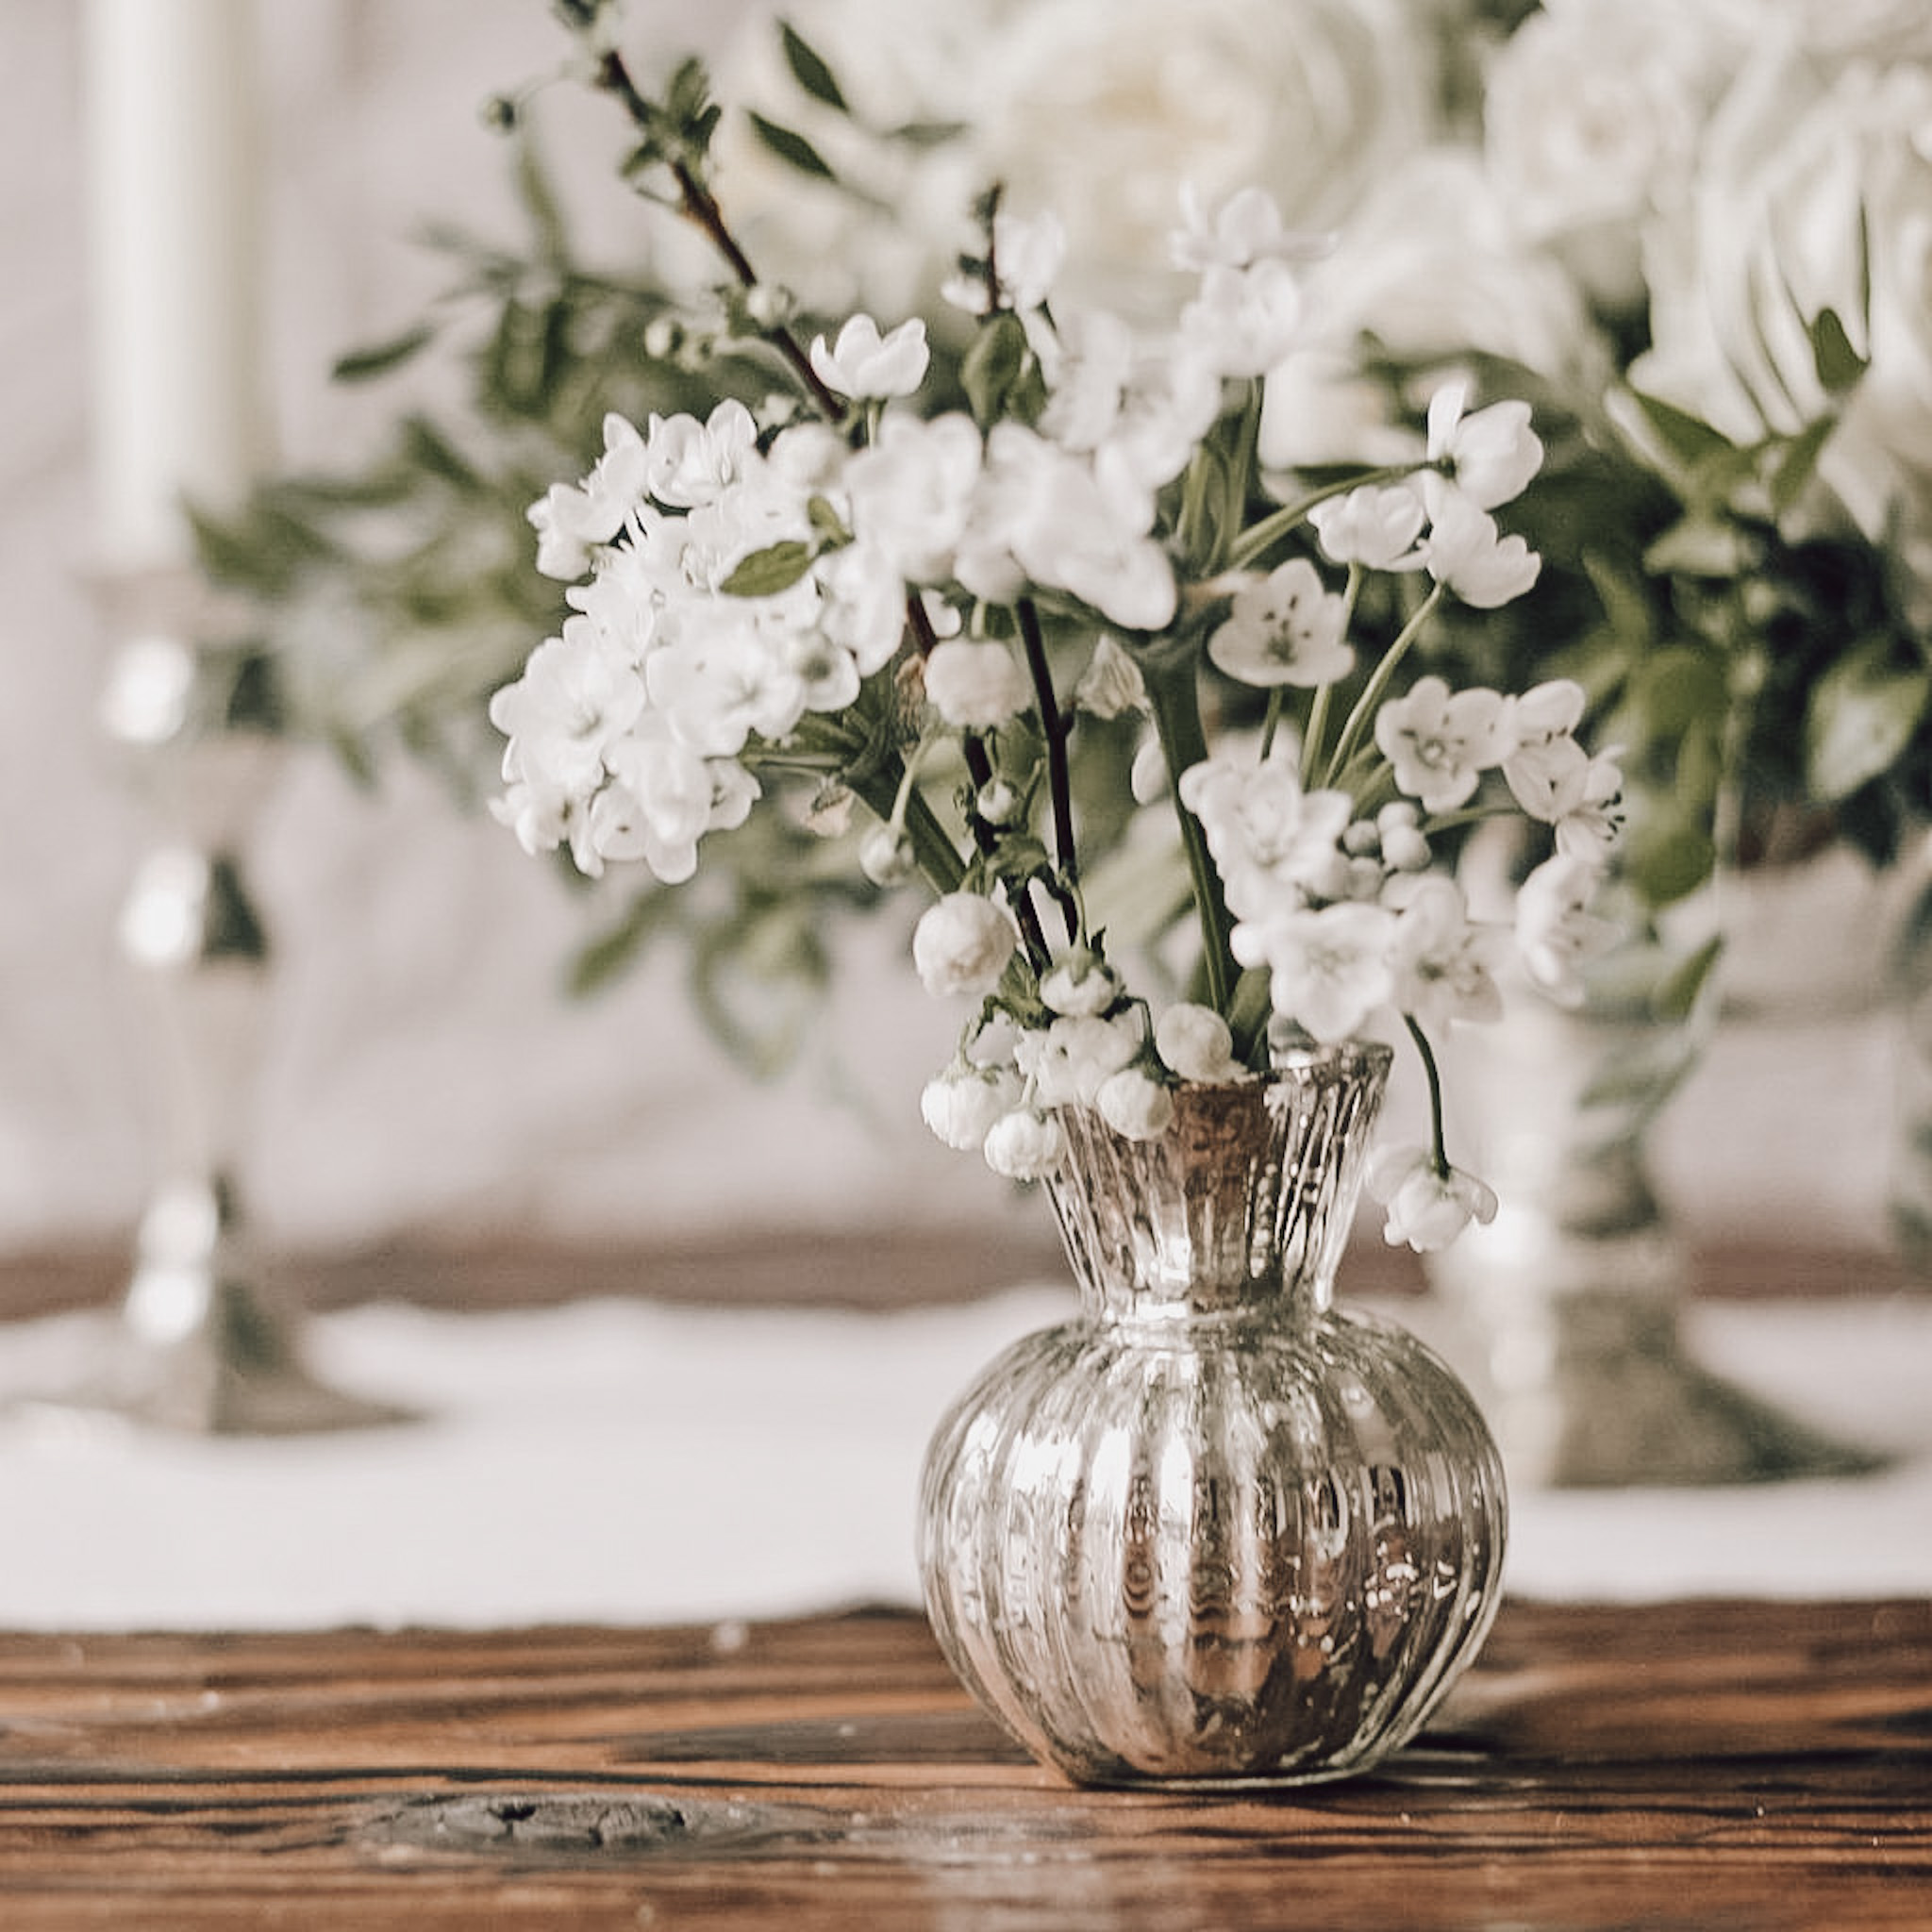 Silver Bud vases for weddings